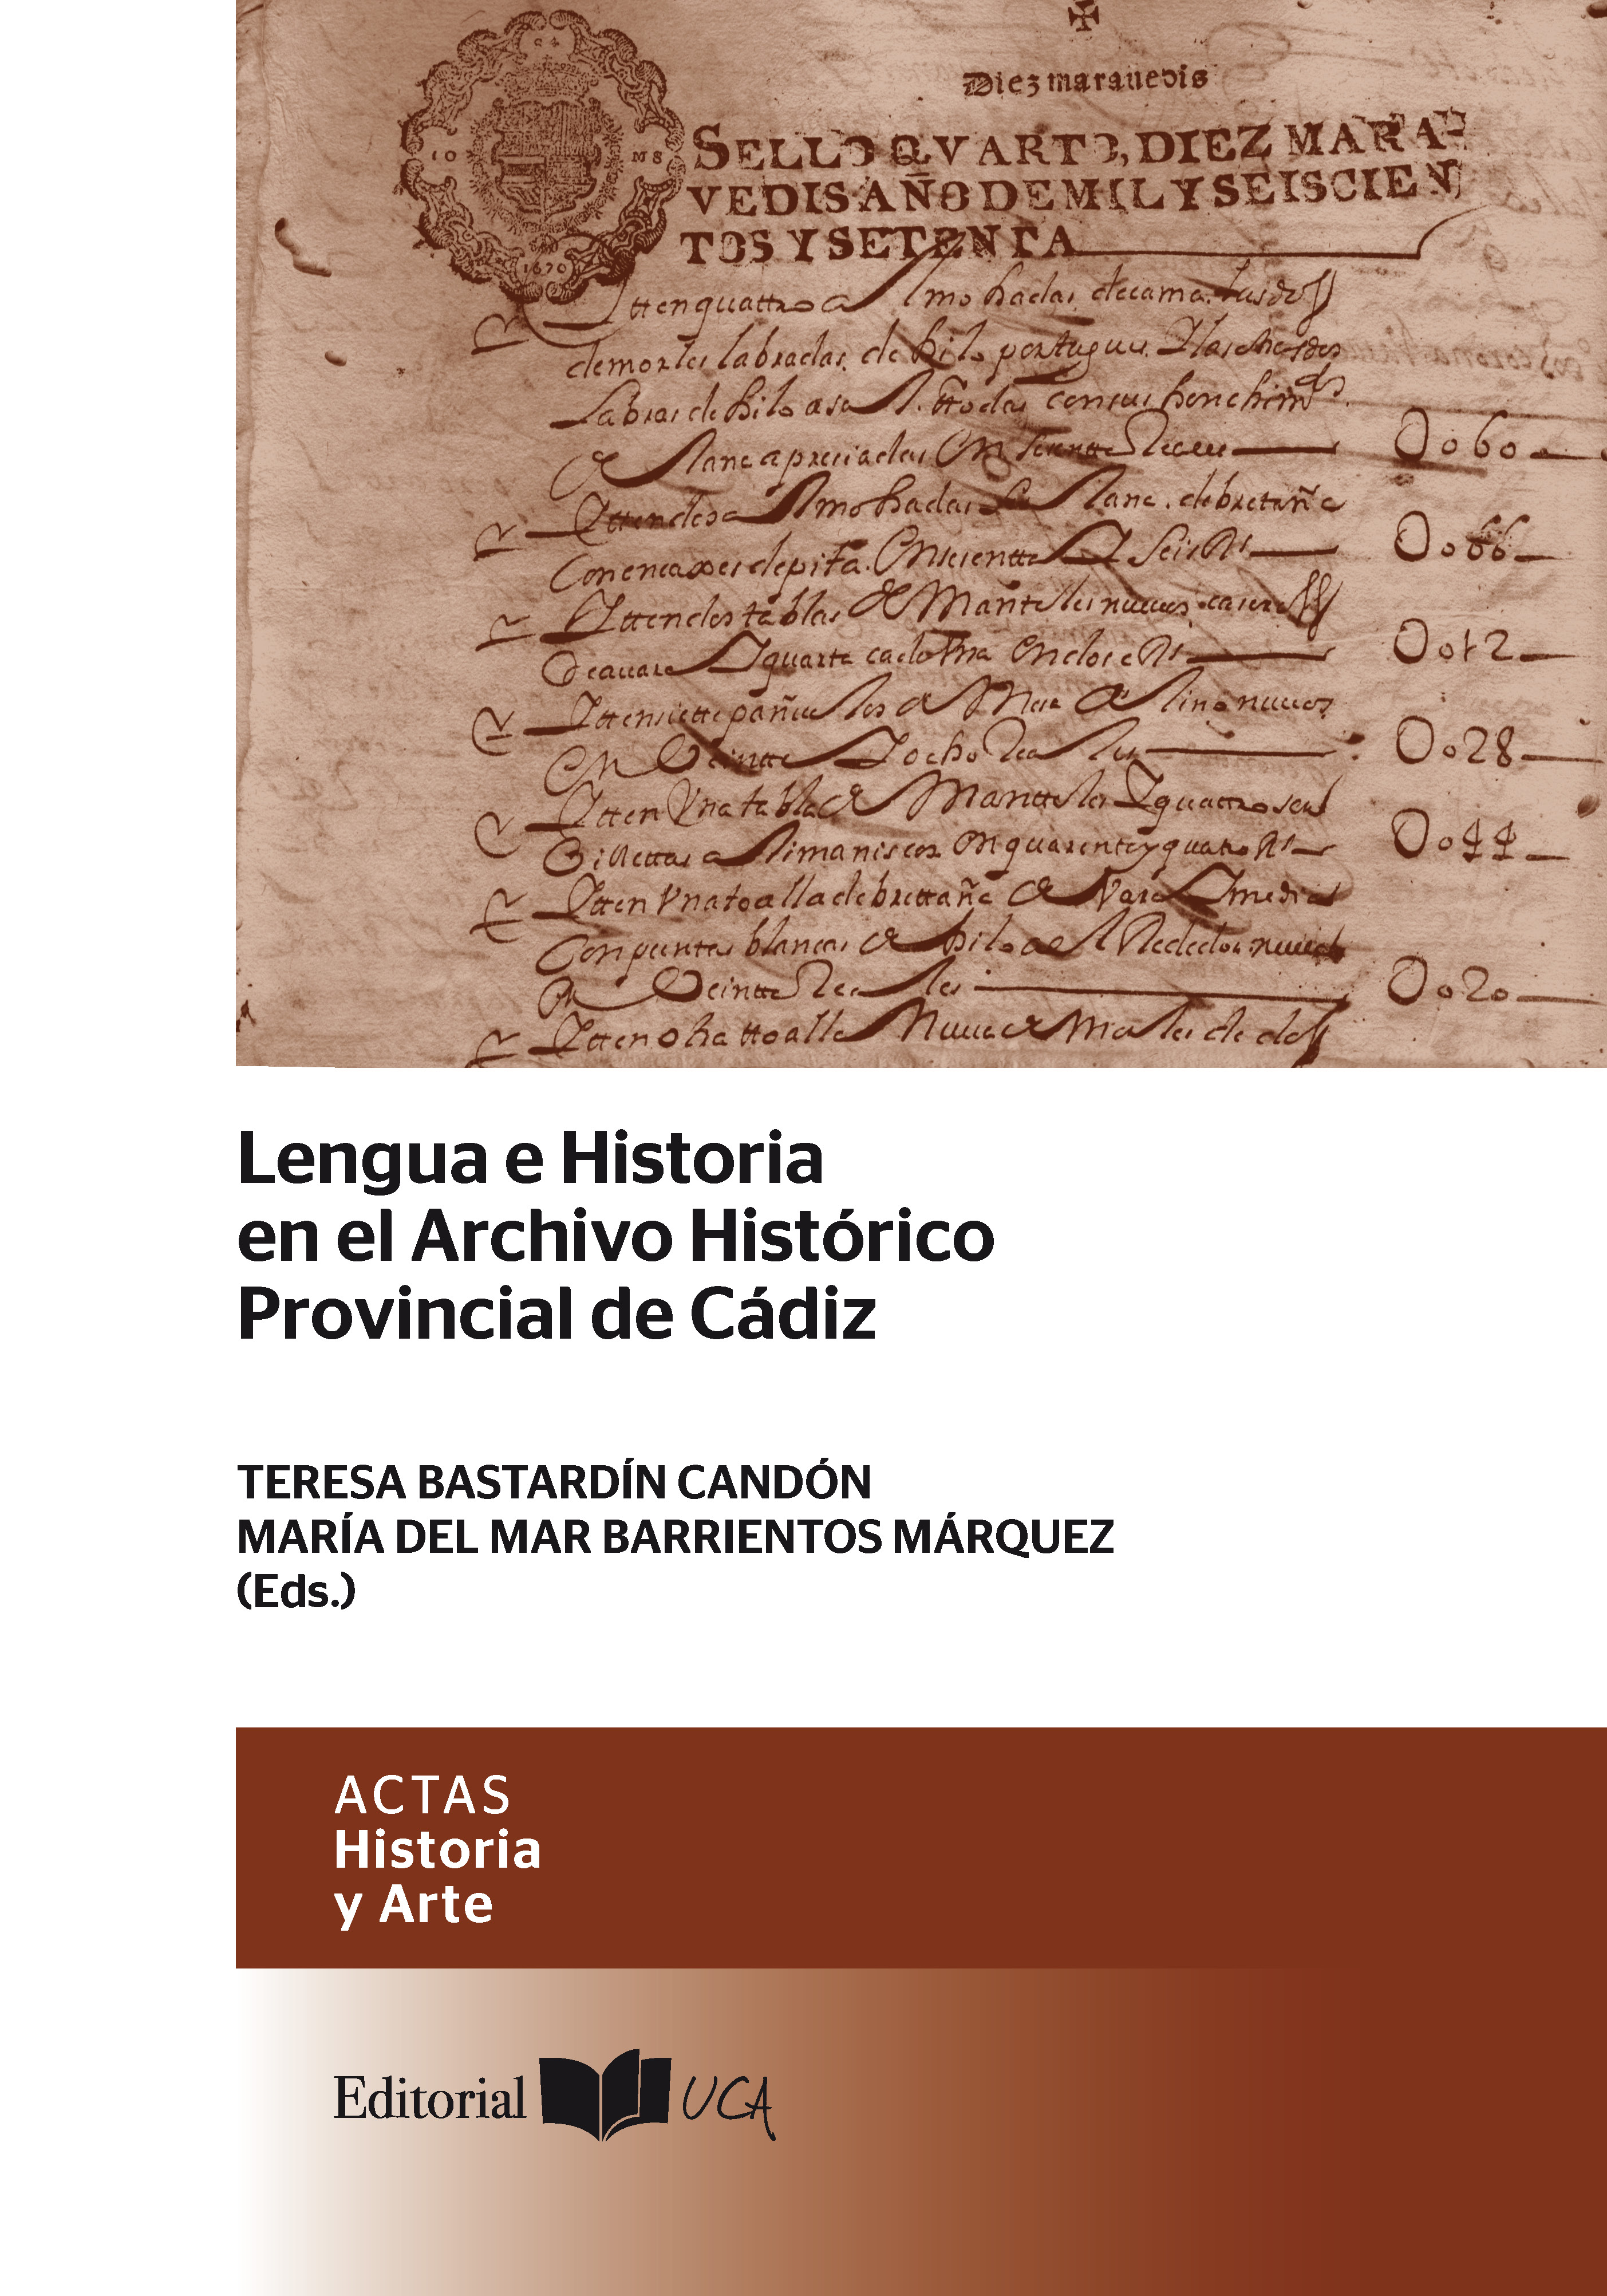 Lengua e Historia en el Archivo Histórico Provincial de Cádiz